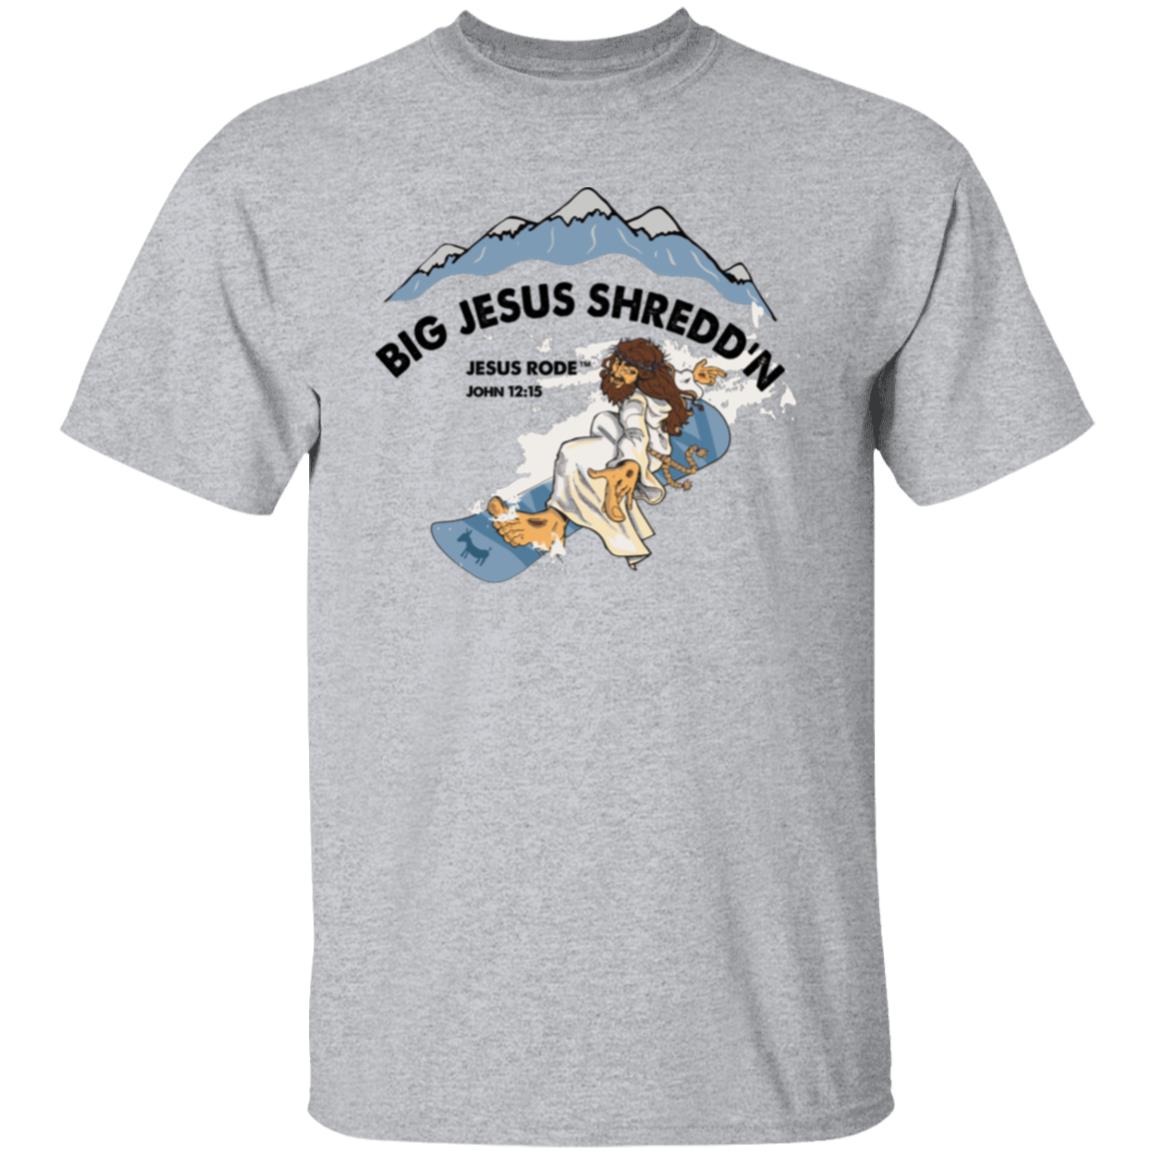 Shredd'n Jesus Men's Cotton Short Sleeve T-Shirt